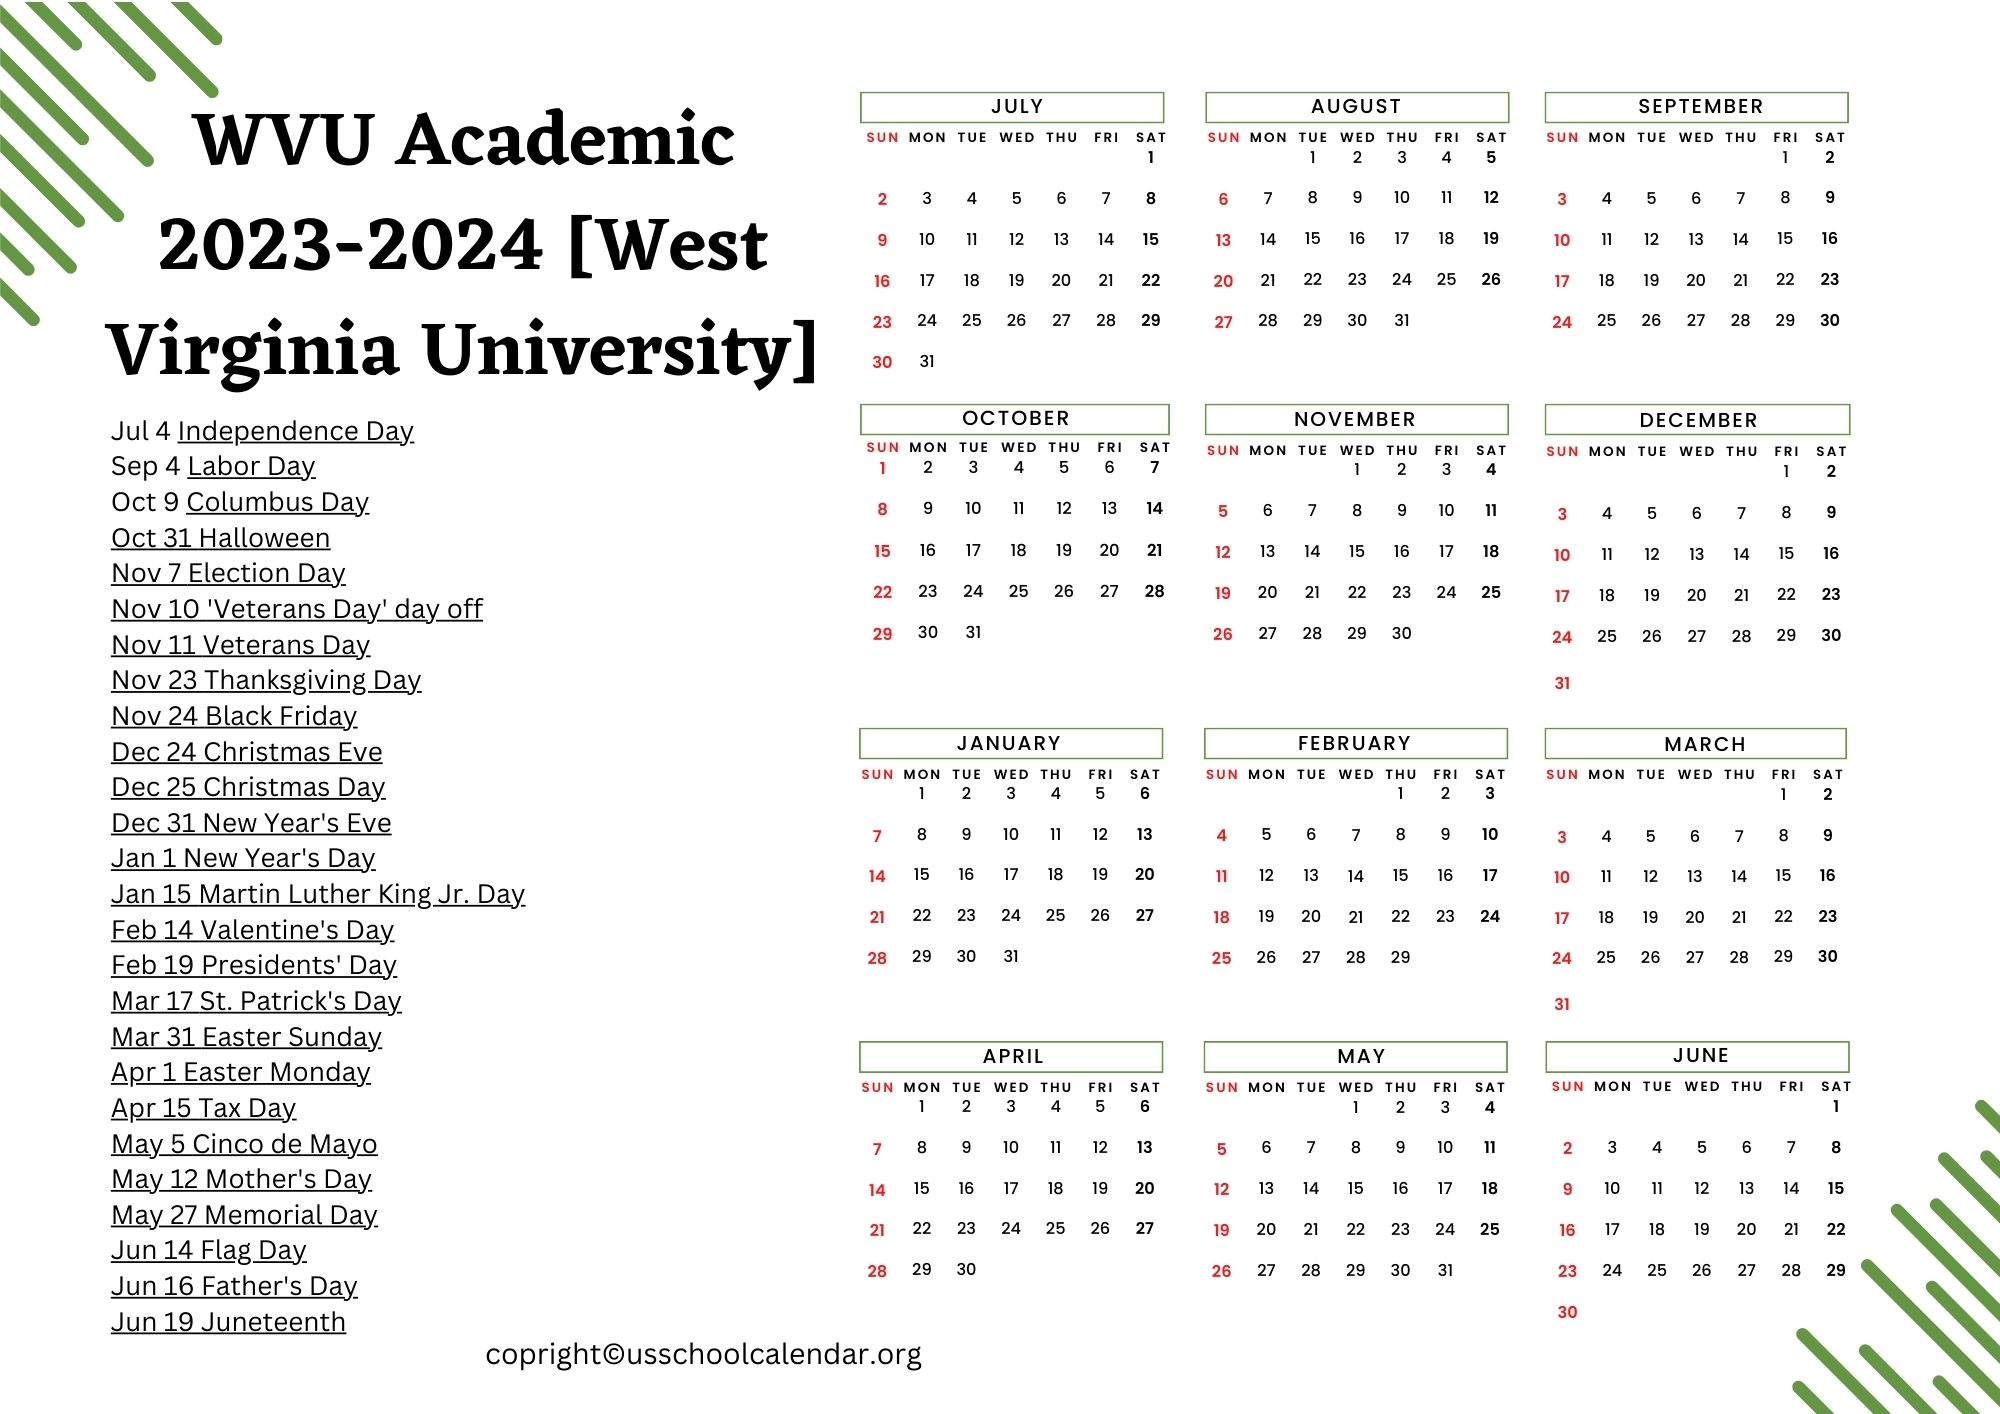 WVU Academic Calendar 2023 2024 West Virginia University 